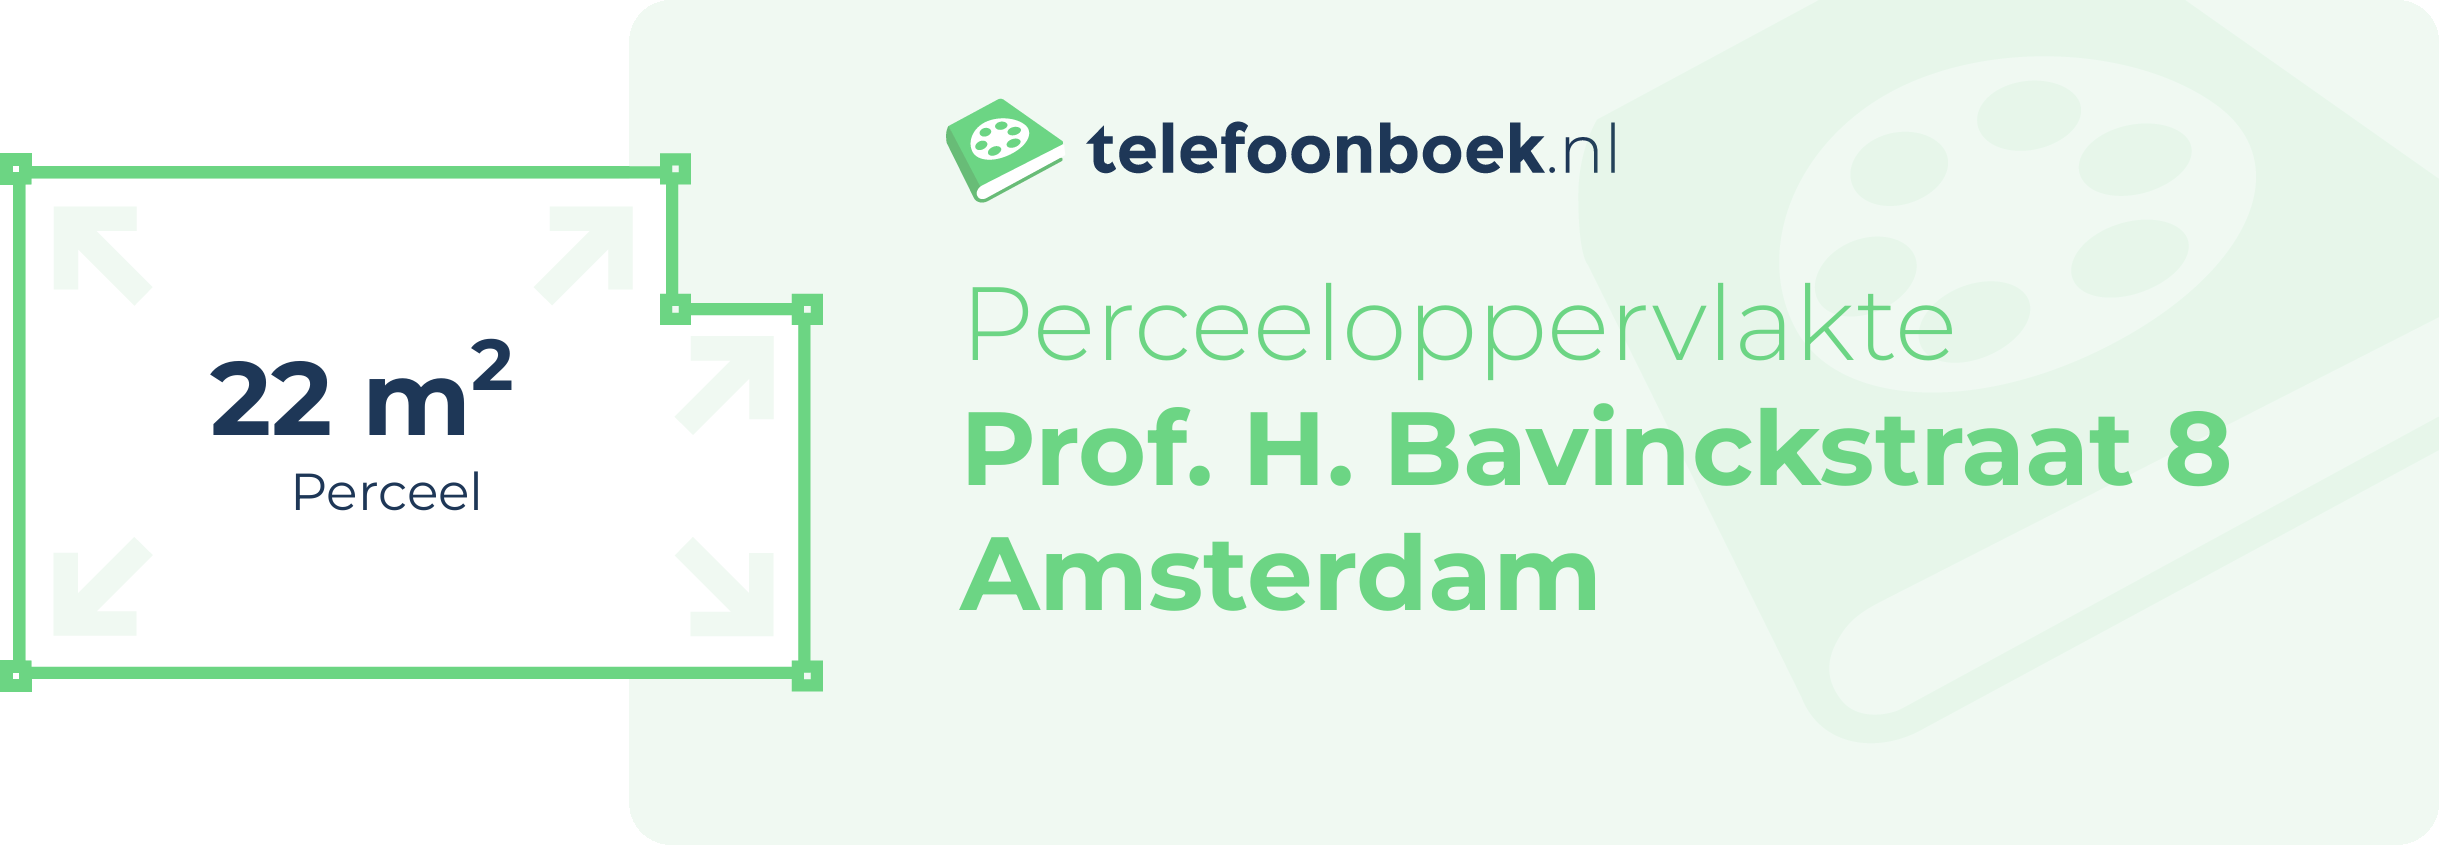 Perceeloppervlakte Prof. H. Bavinckstraat 8 Amsterdam